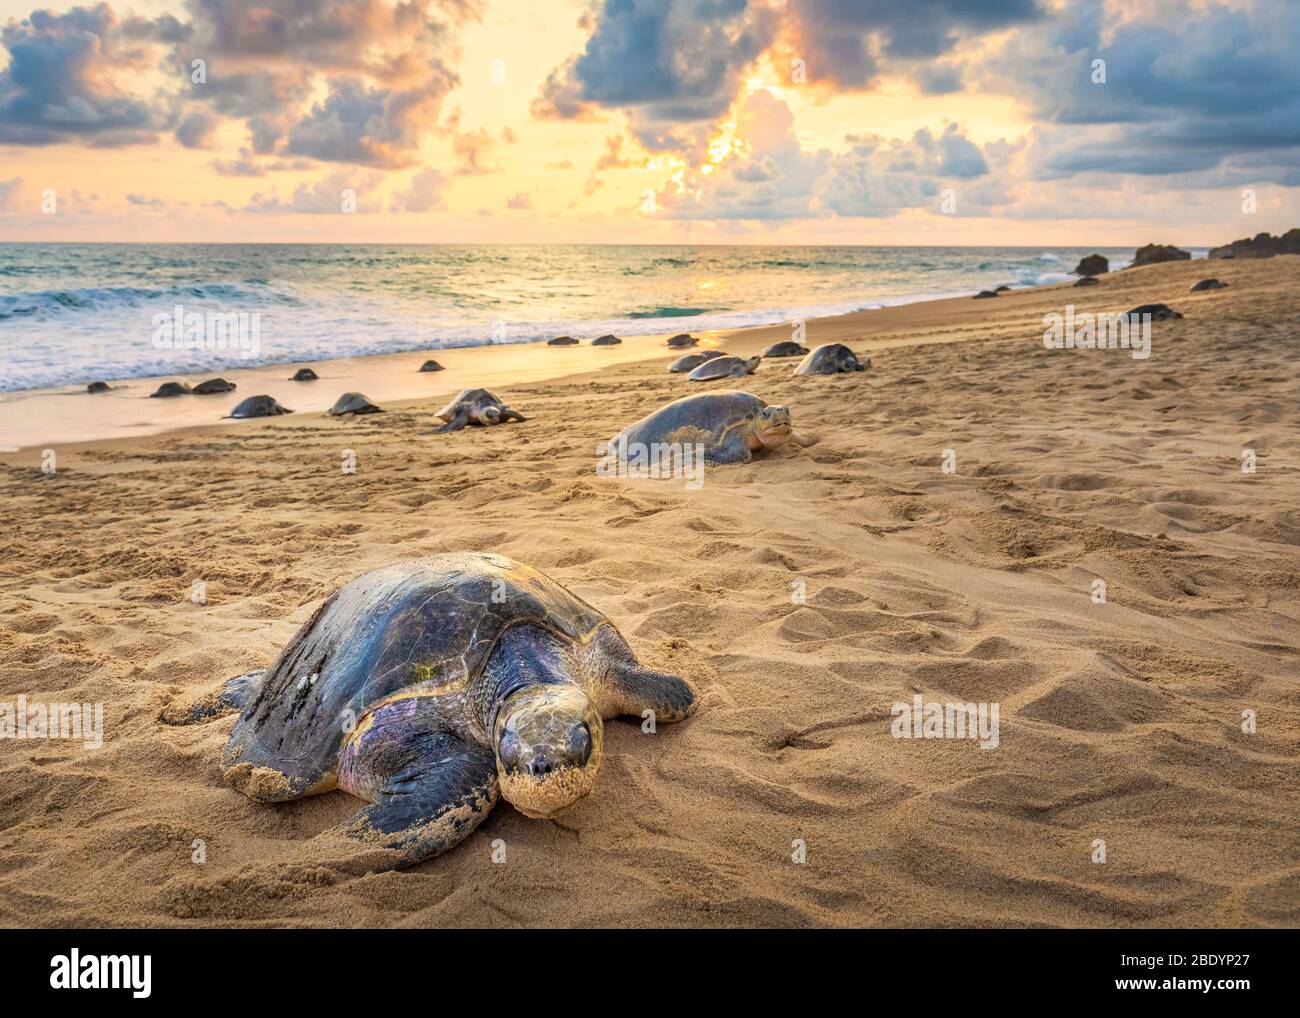 Olive Ridley sea turtles crawl on shore to nest en masse at Ixtapilla, Michoacan, Mexico. Stock Photo